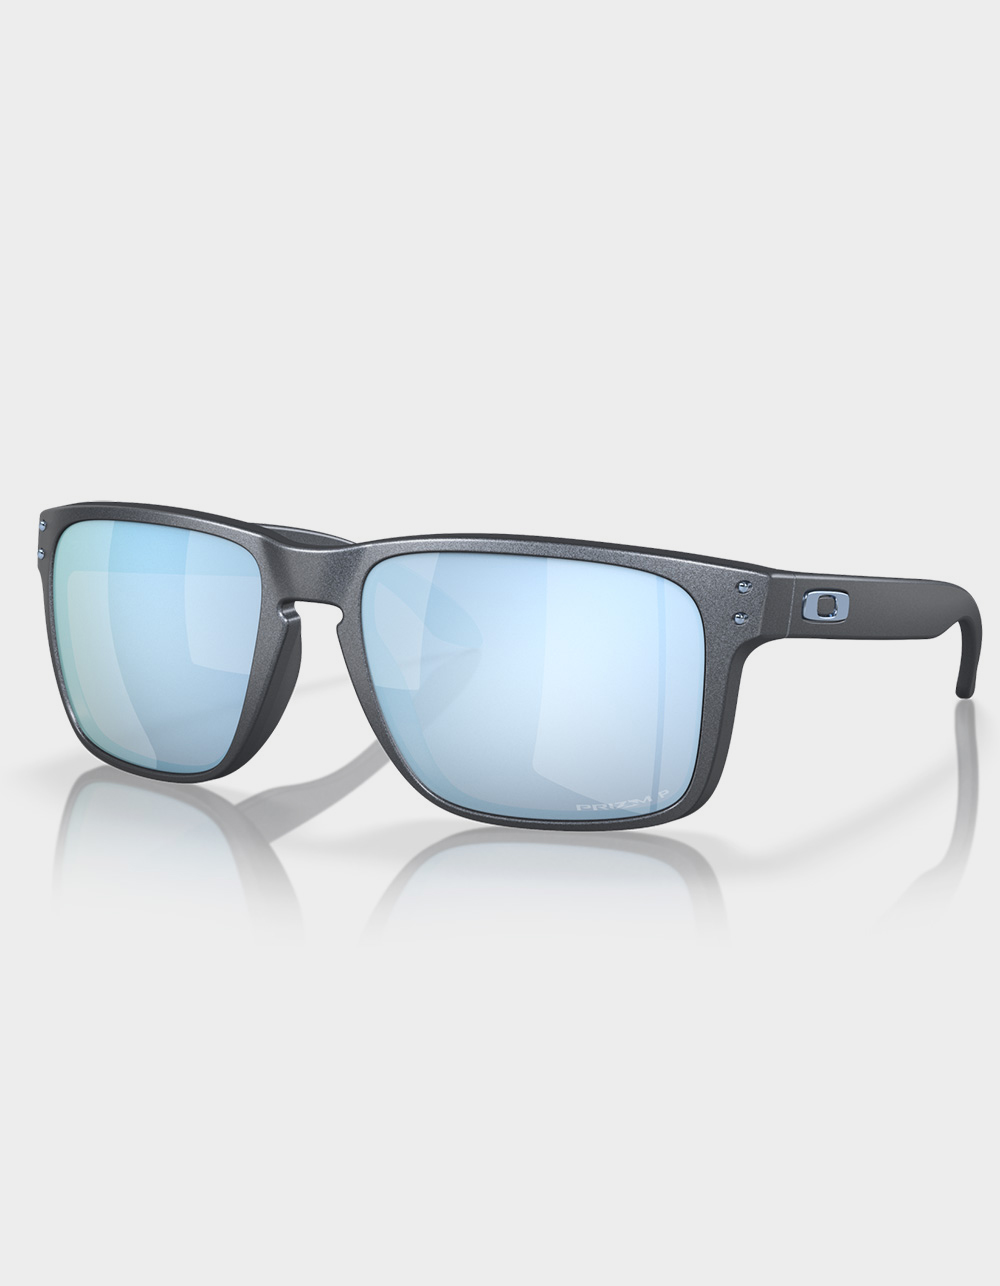 OAKLEY Holbrook™ XL Polarized Sunglasses